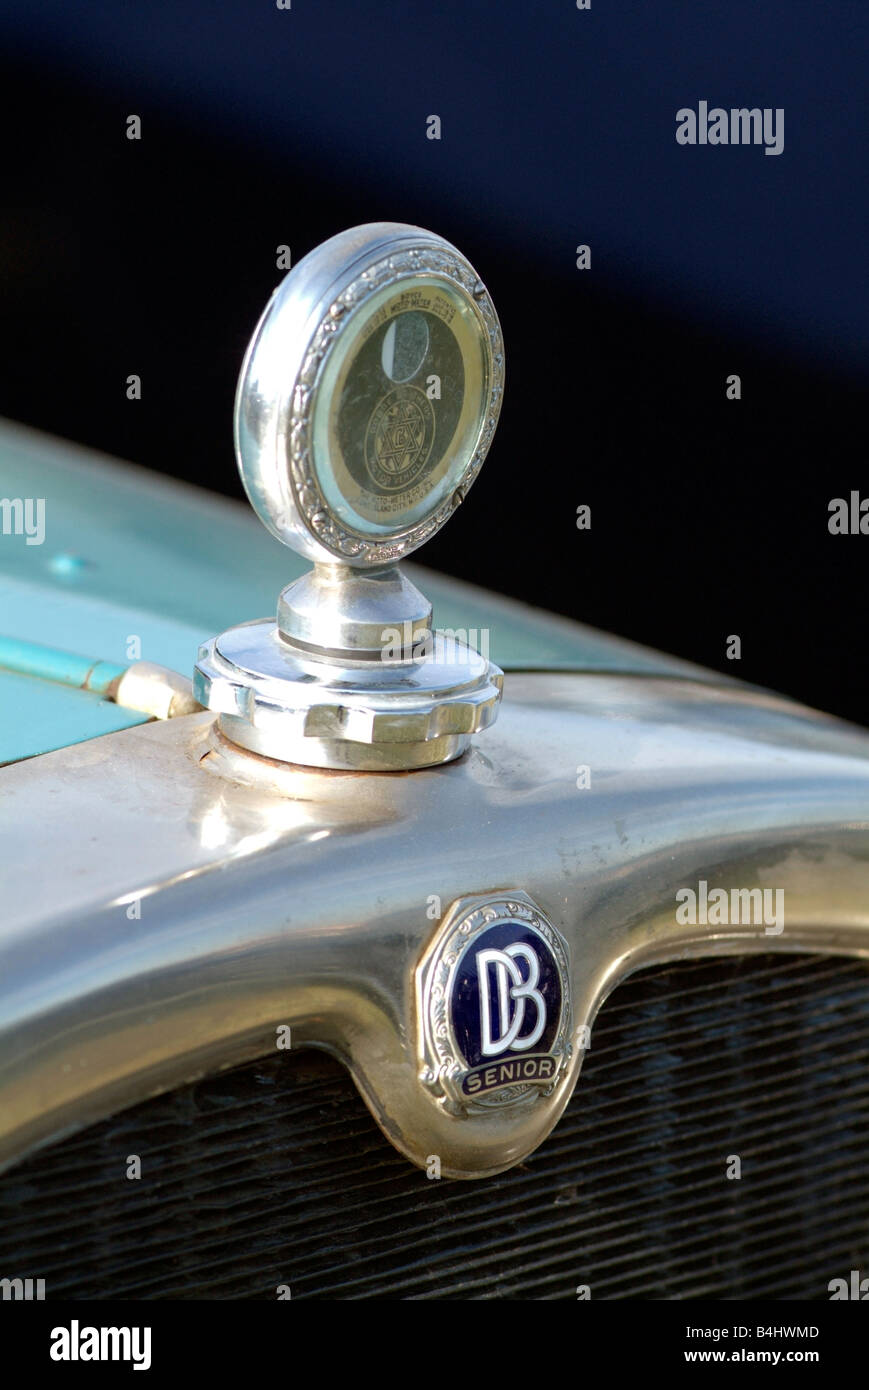 Dodge Brothers DB Senior vintage car radiator with Boyce moto meter on top of radiator header tank Stock Photo